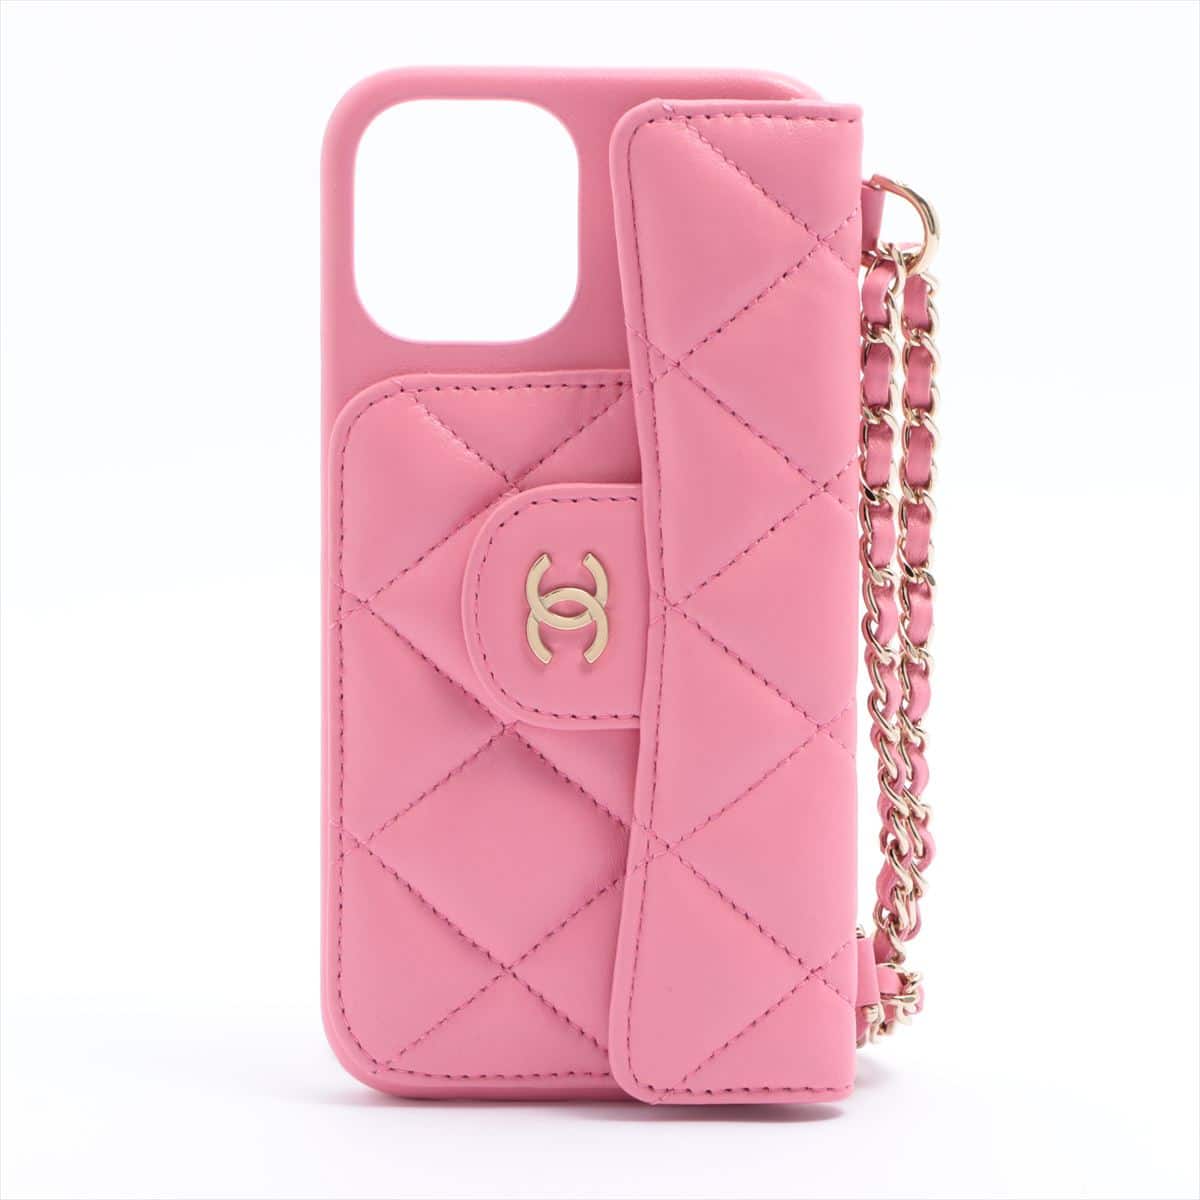 Chanel Matelasse Lambskin iPhone case Pink Gold Metal fittings 30 iPhone12 PRO